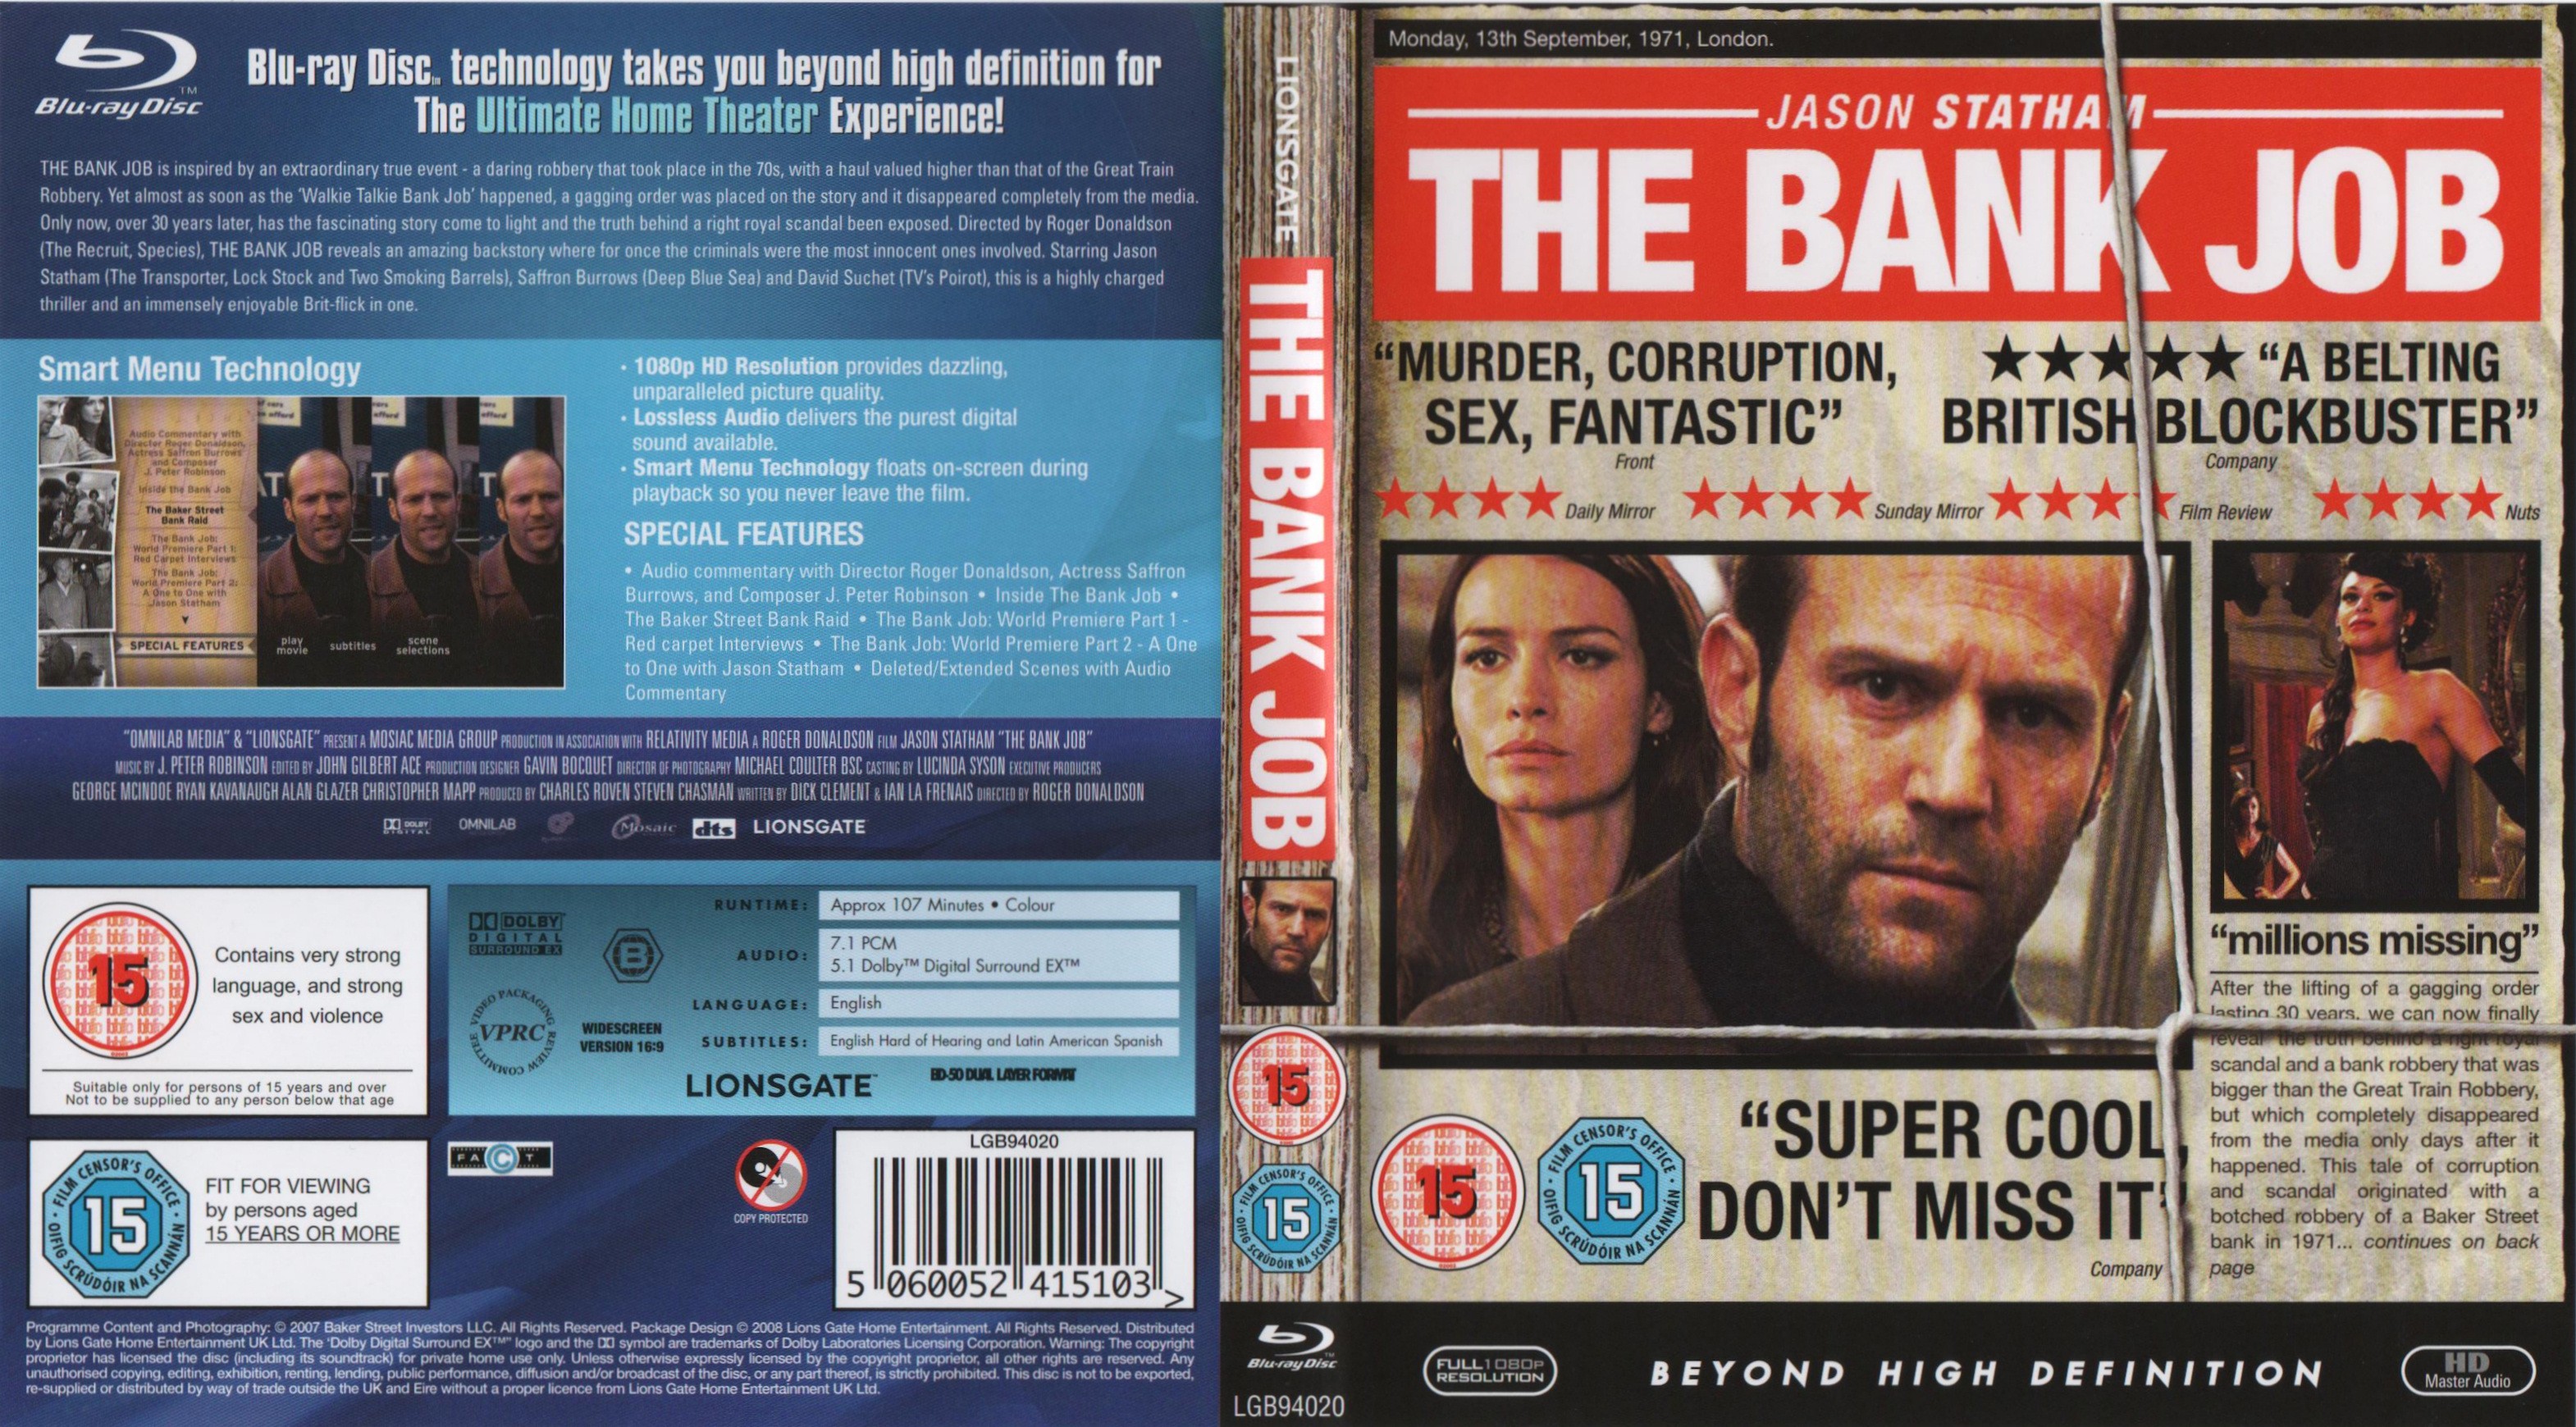 Jaquette DVD The bank job (BLU-RAY) v3